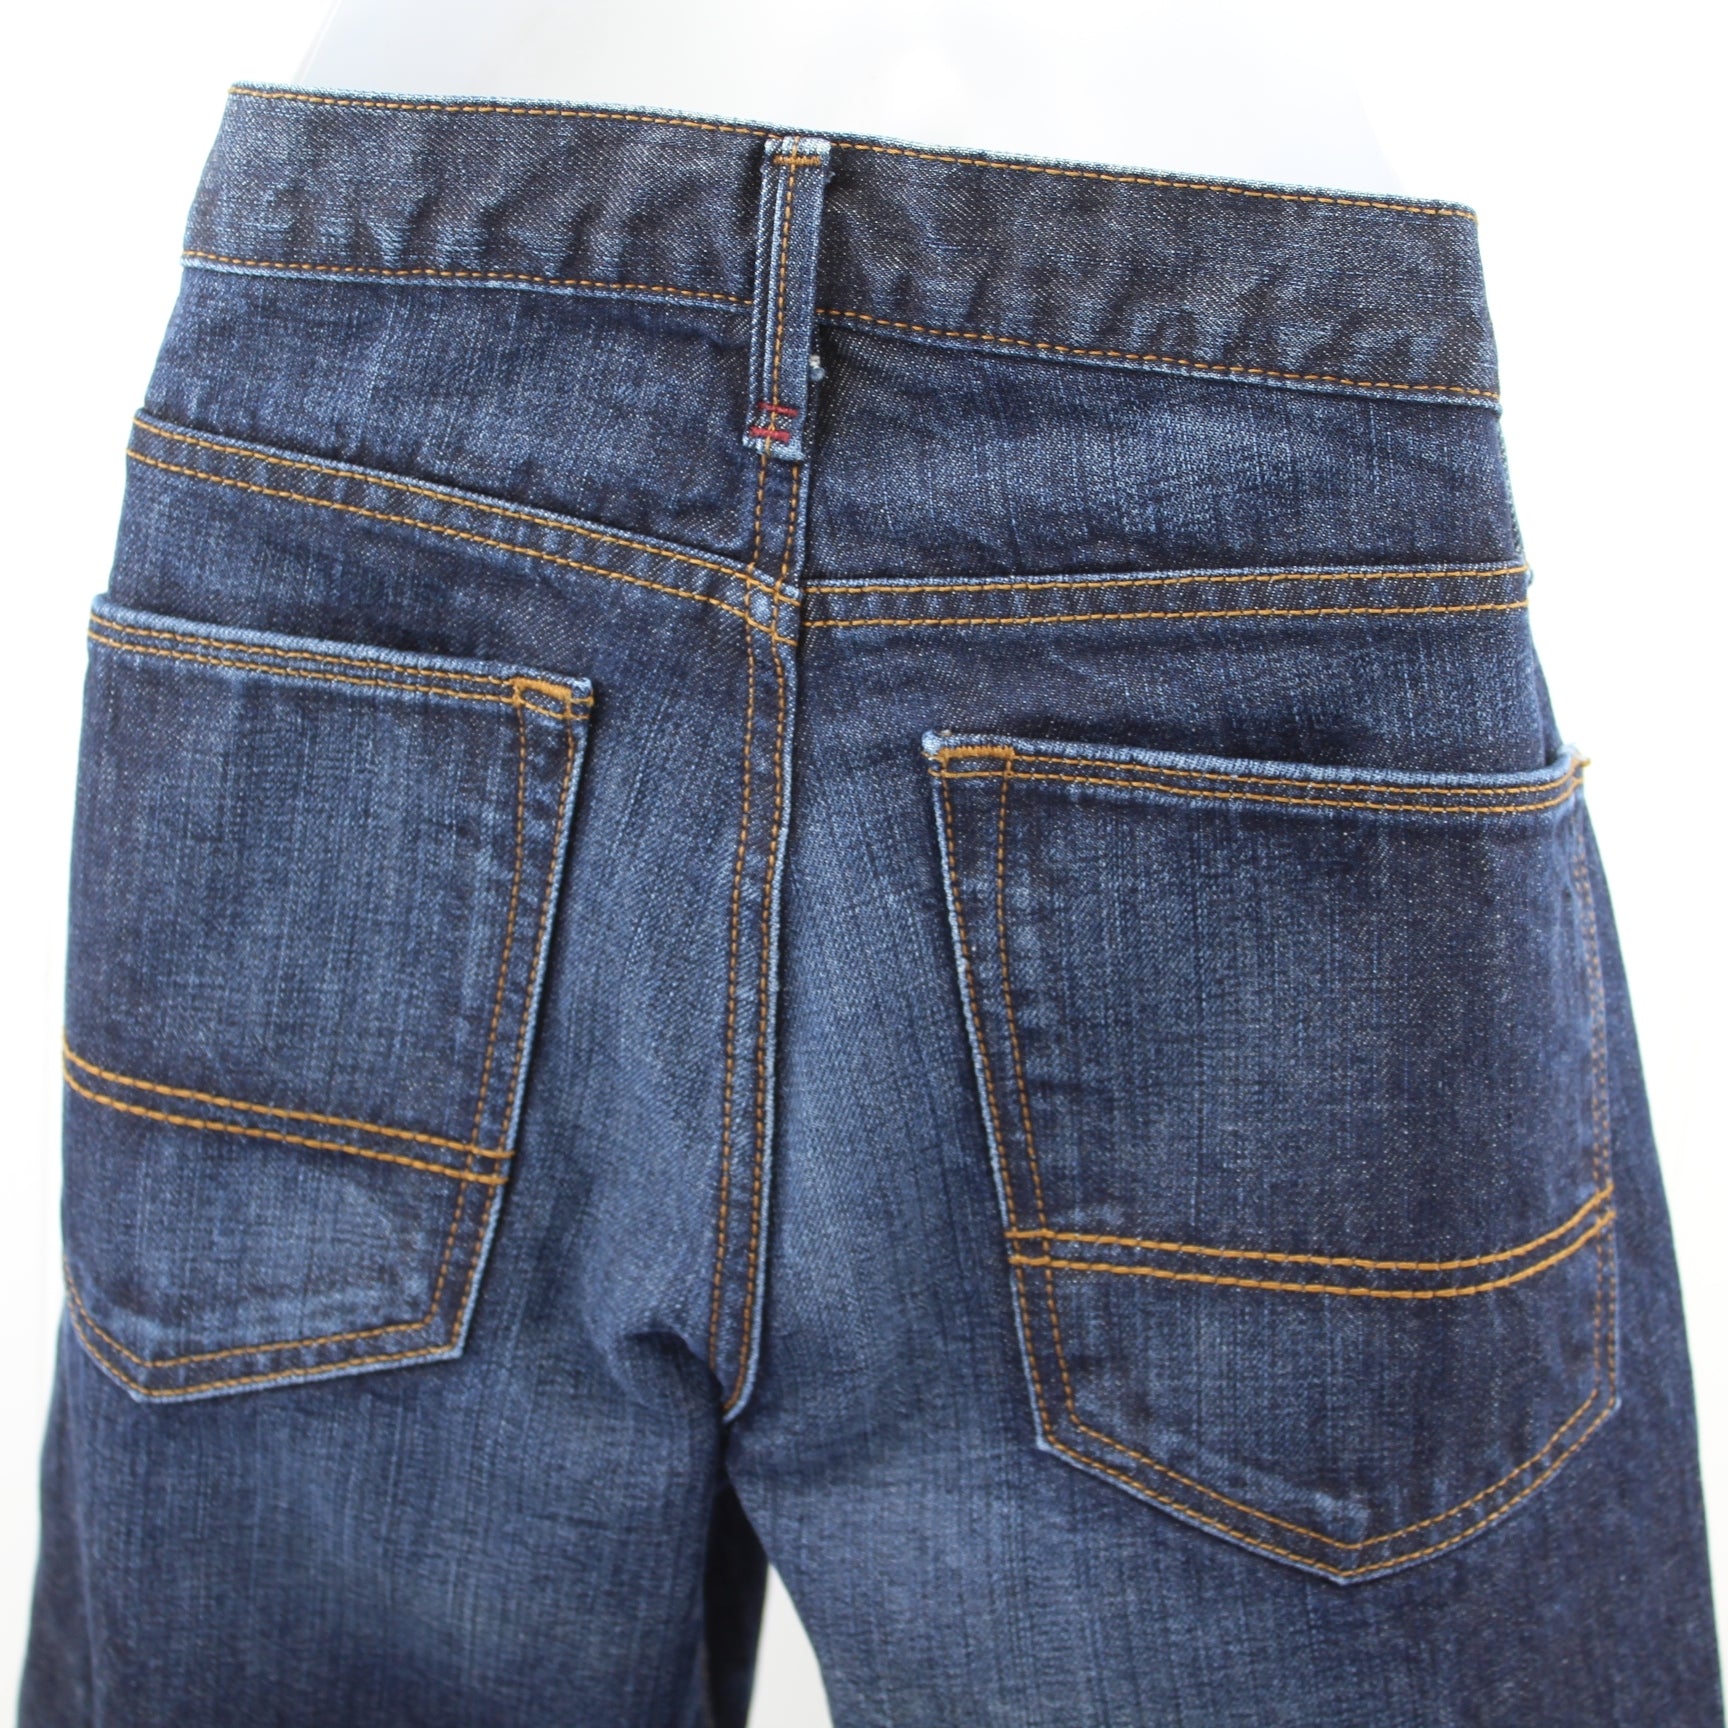 Arizona 100% Cotton Jeans Dark Blue Straight Cut 32X32 no flaws sturdy double seam